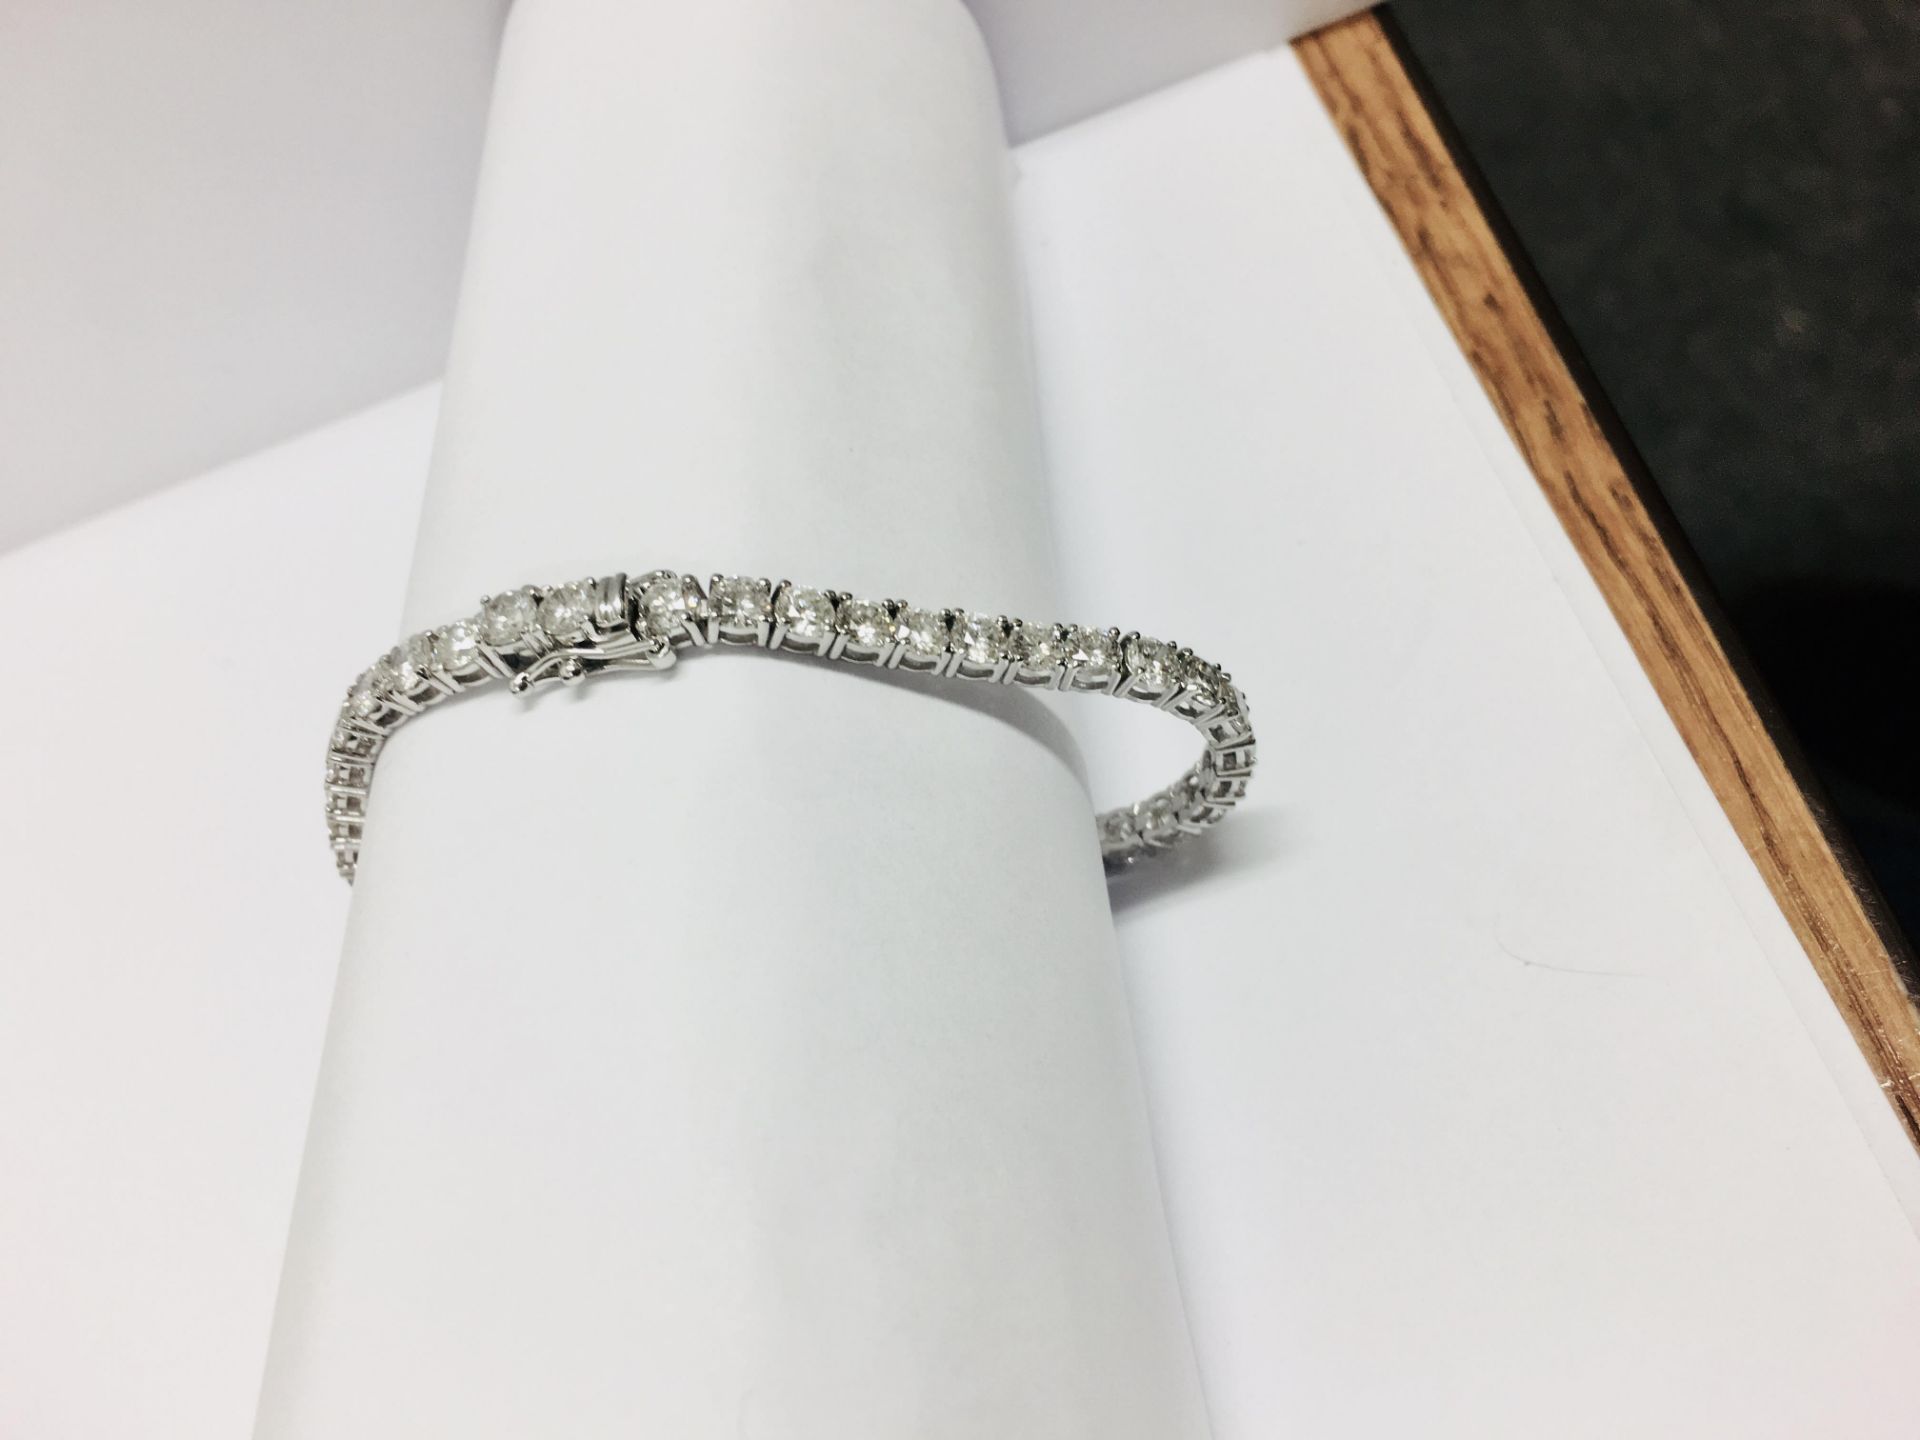 10.00ct Diamond tennis bracelet set with brilliant cut diamonds of I/J colour, si2-3 clarity. All - Bild 6 aus 6